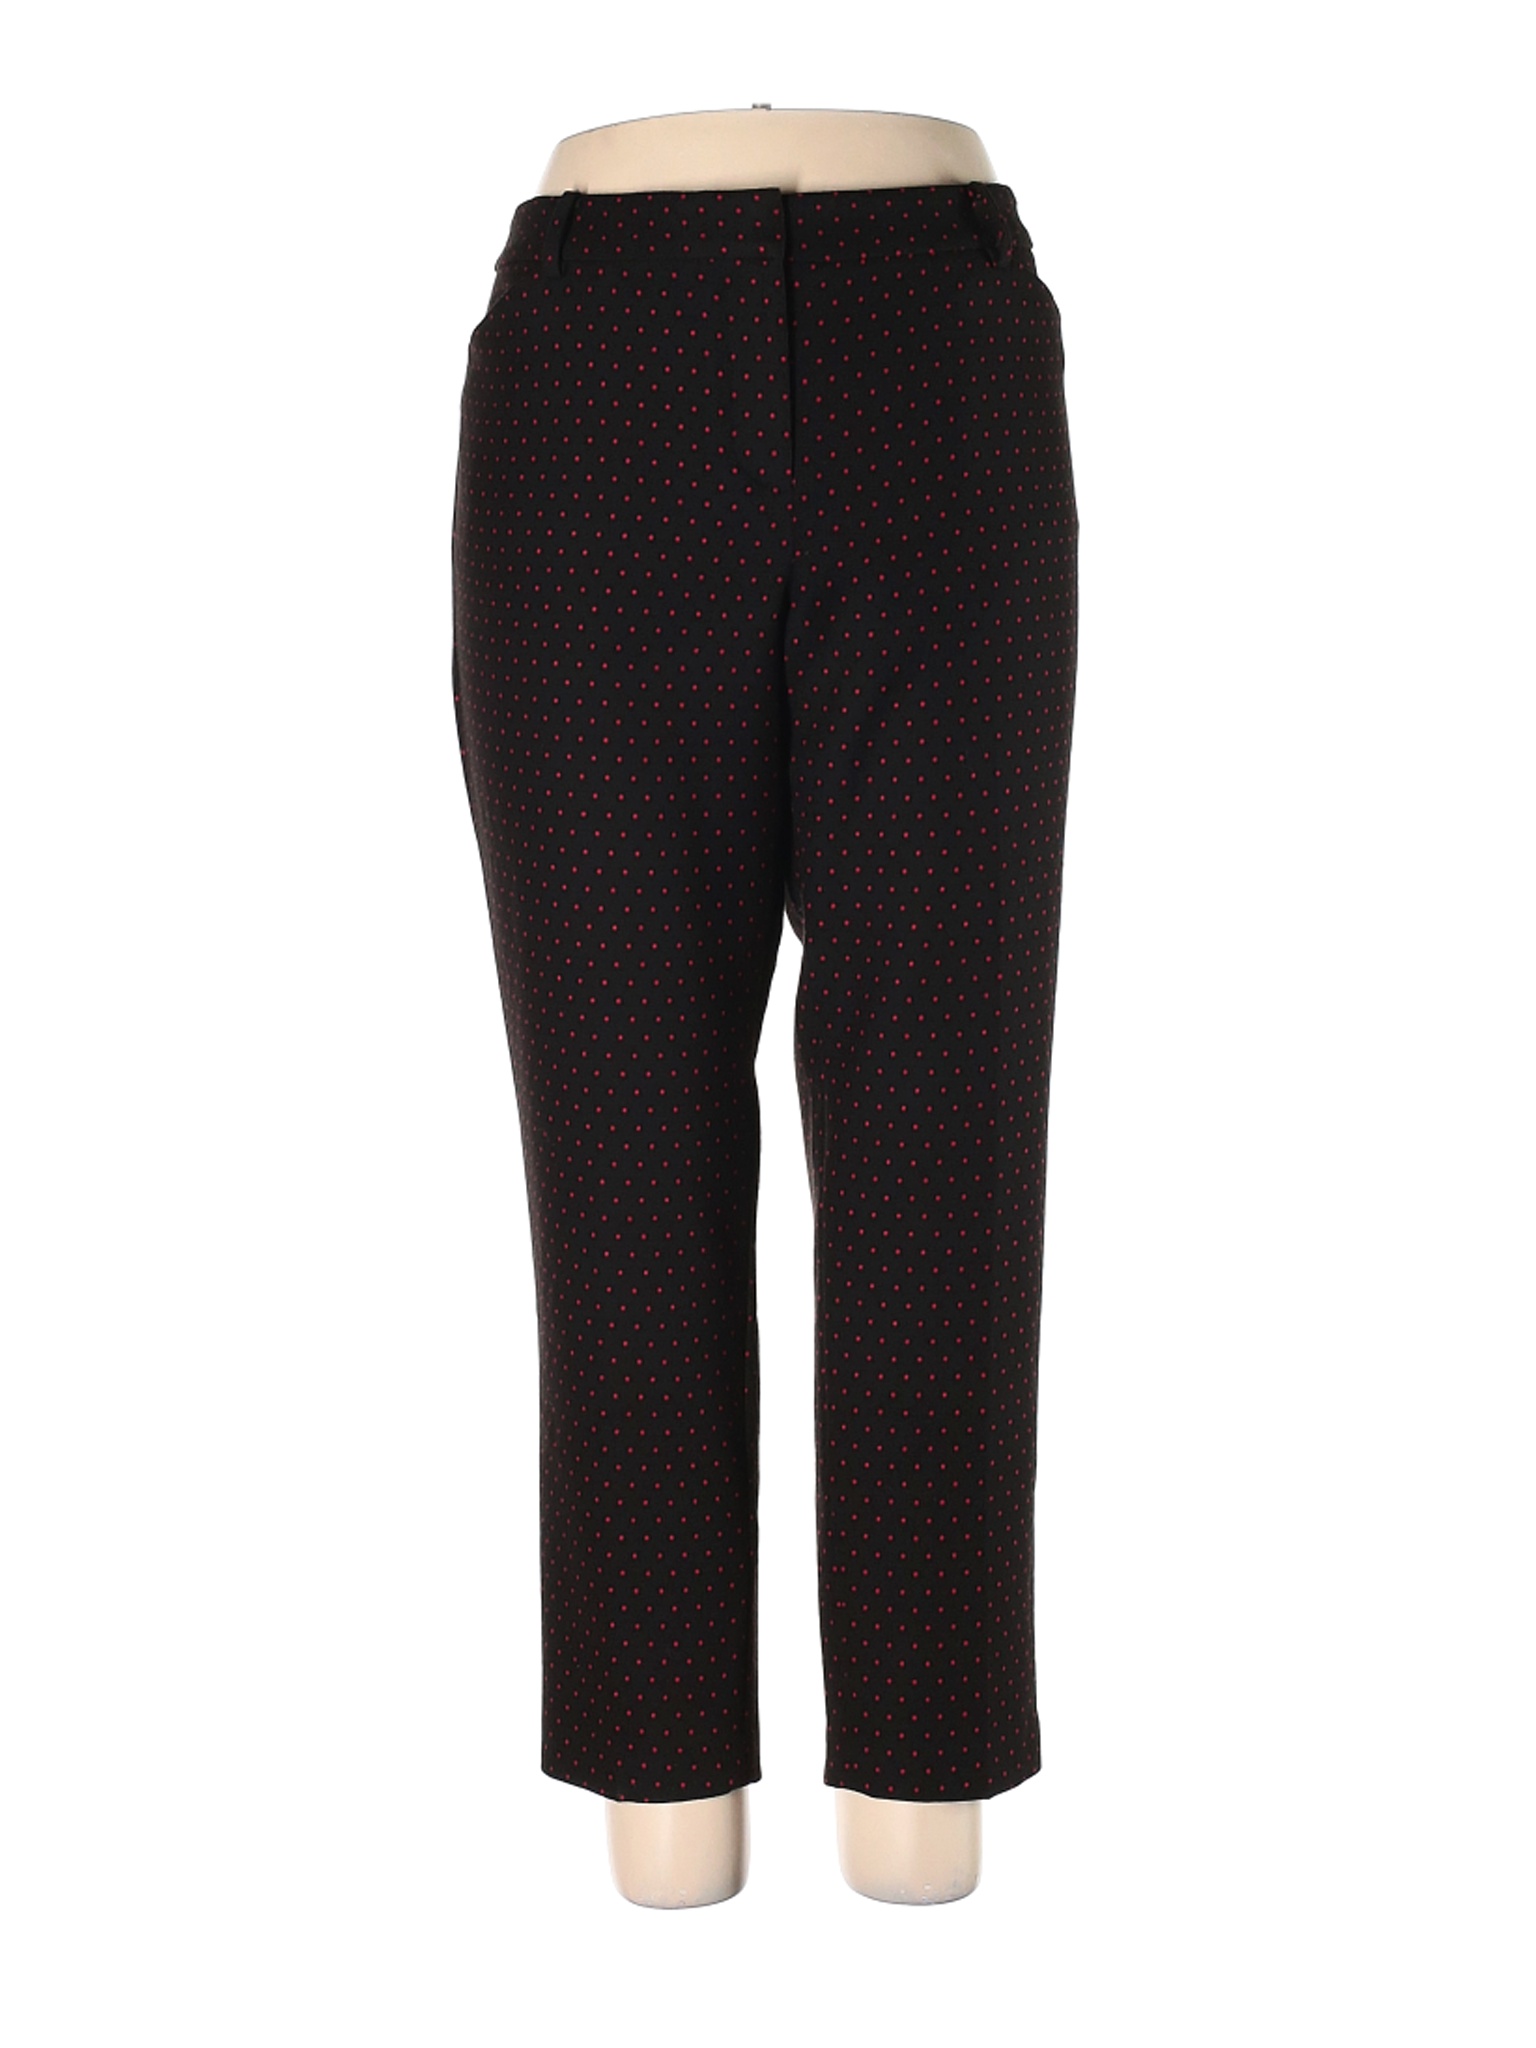 Talbots Women Black Dress Pants 16 | eBay